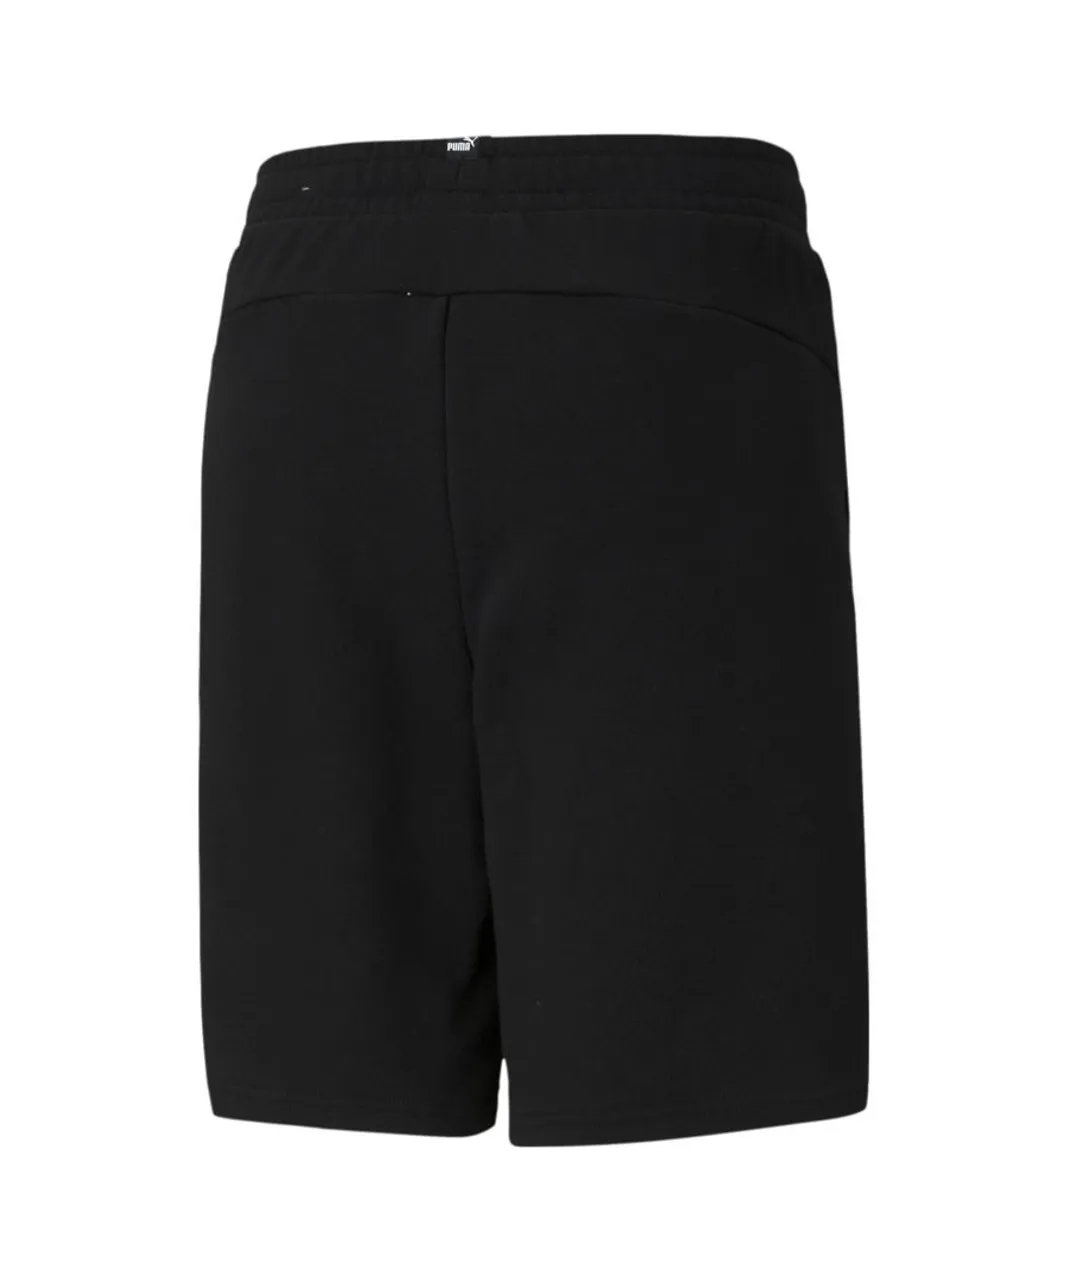 Puma Childrens Unisex Essentials Youth Sweat Shorts - Black